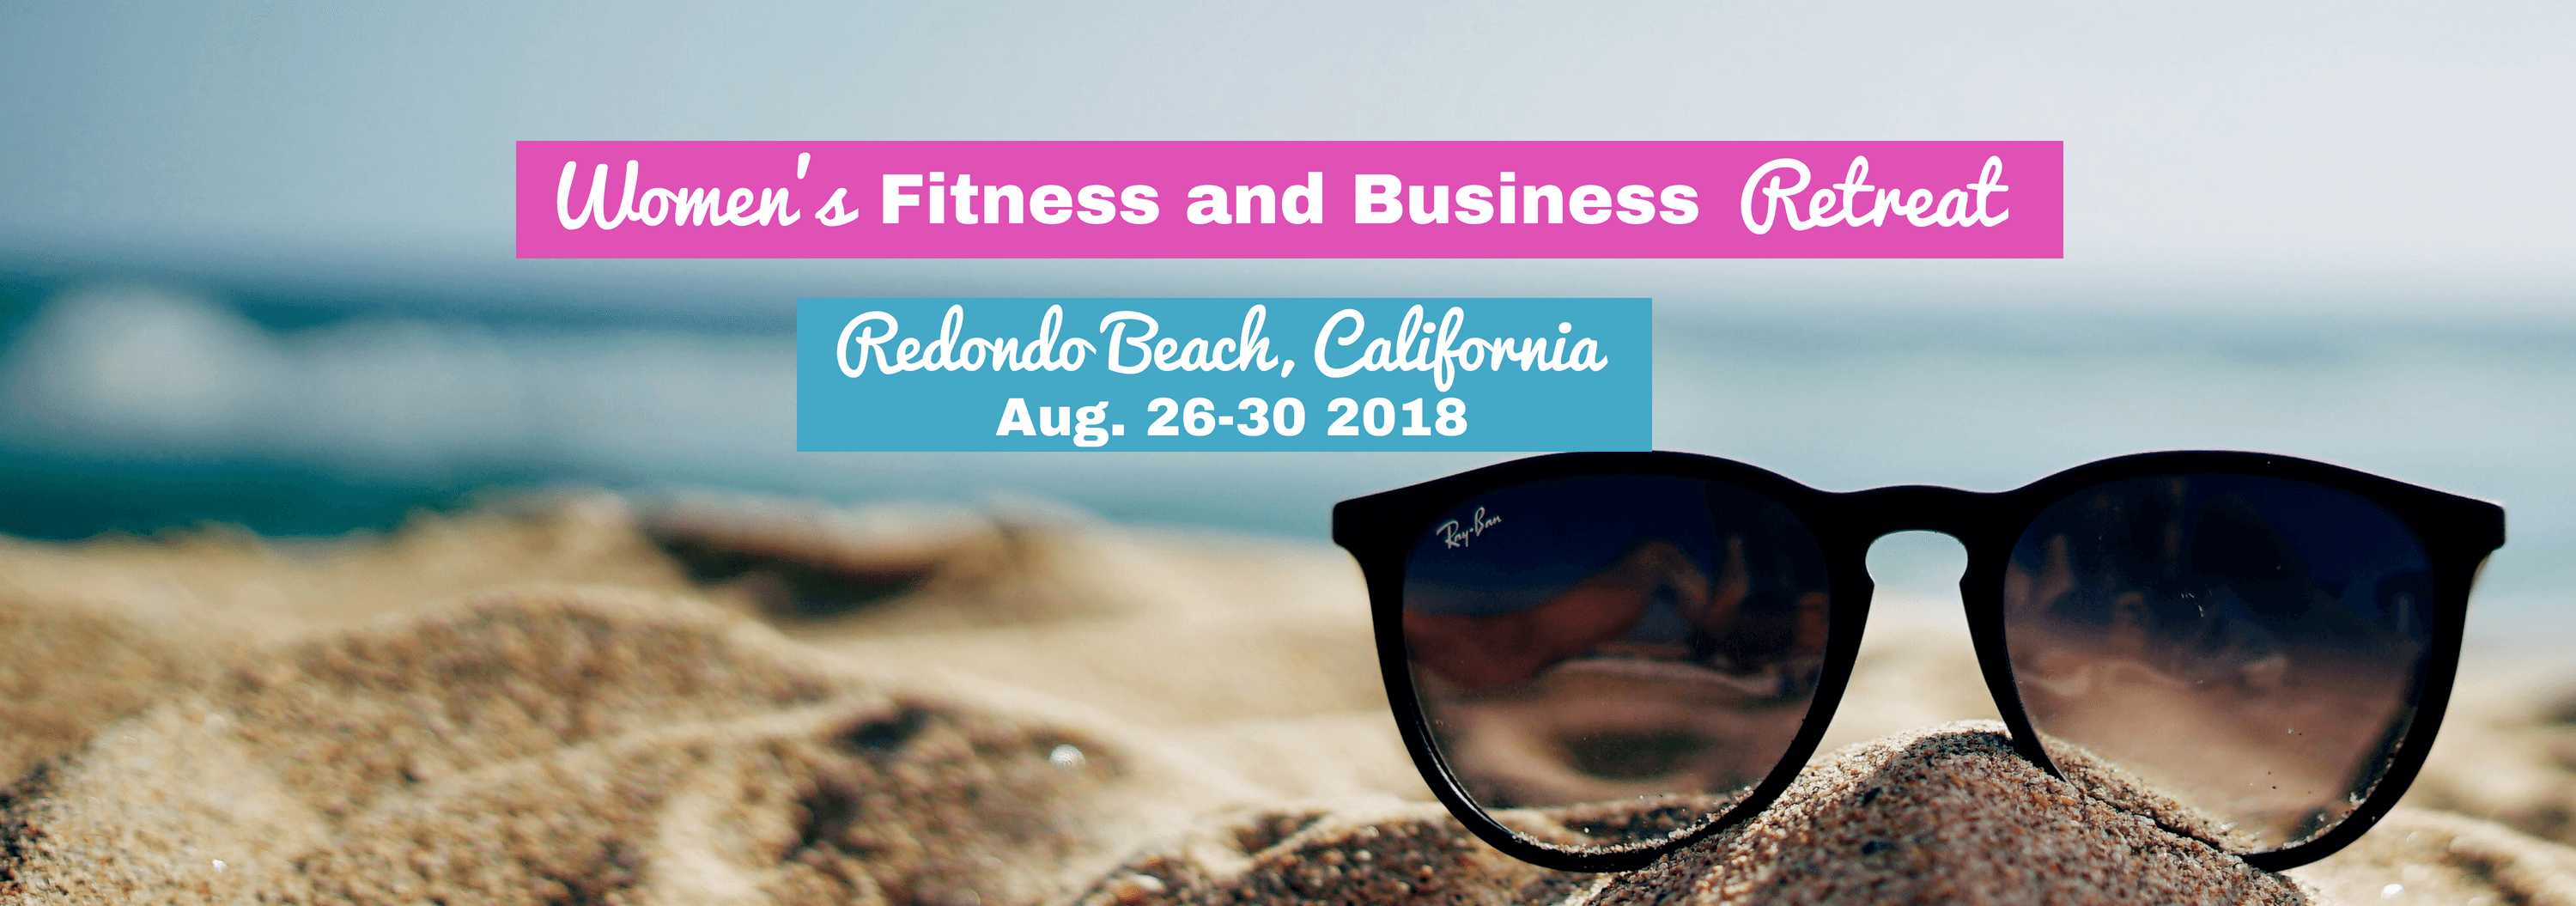 women's fitness retreat california